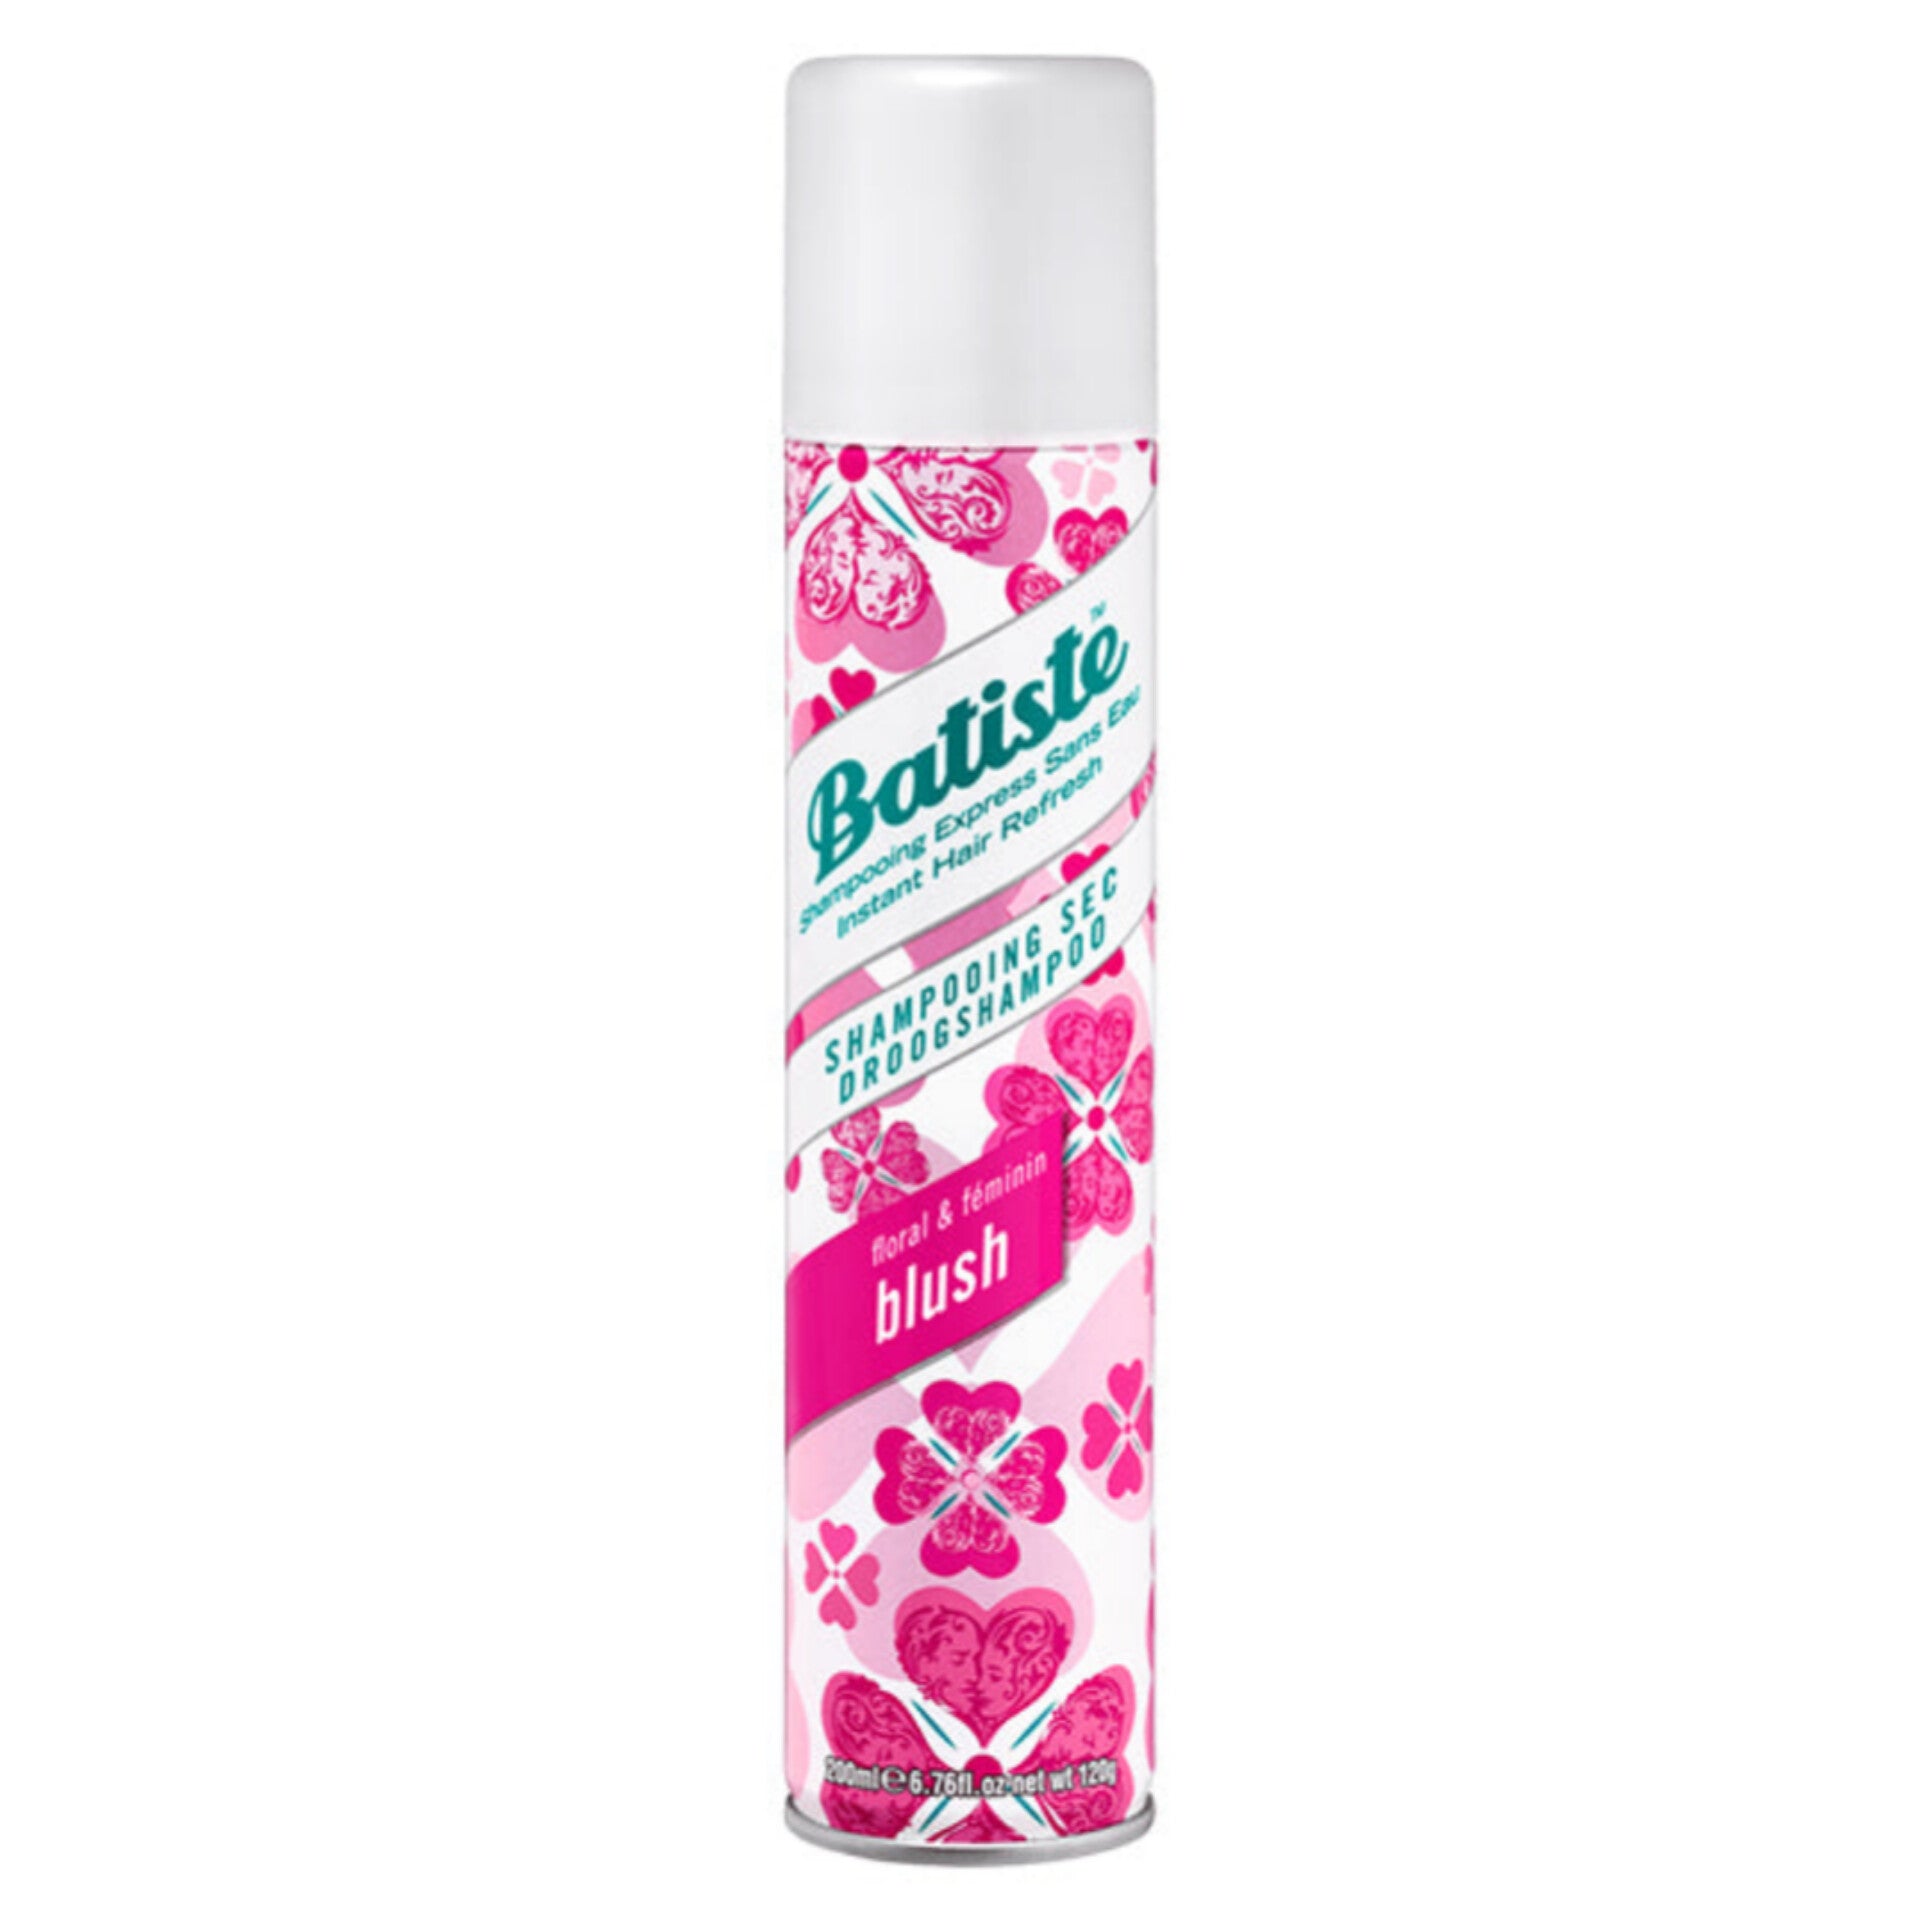 batiste-shampooing-sec-blush-floral-200ml